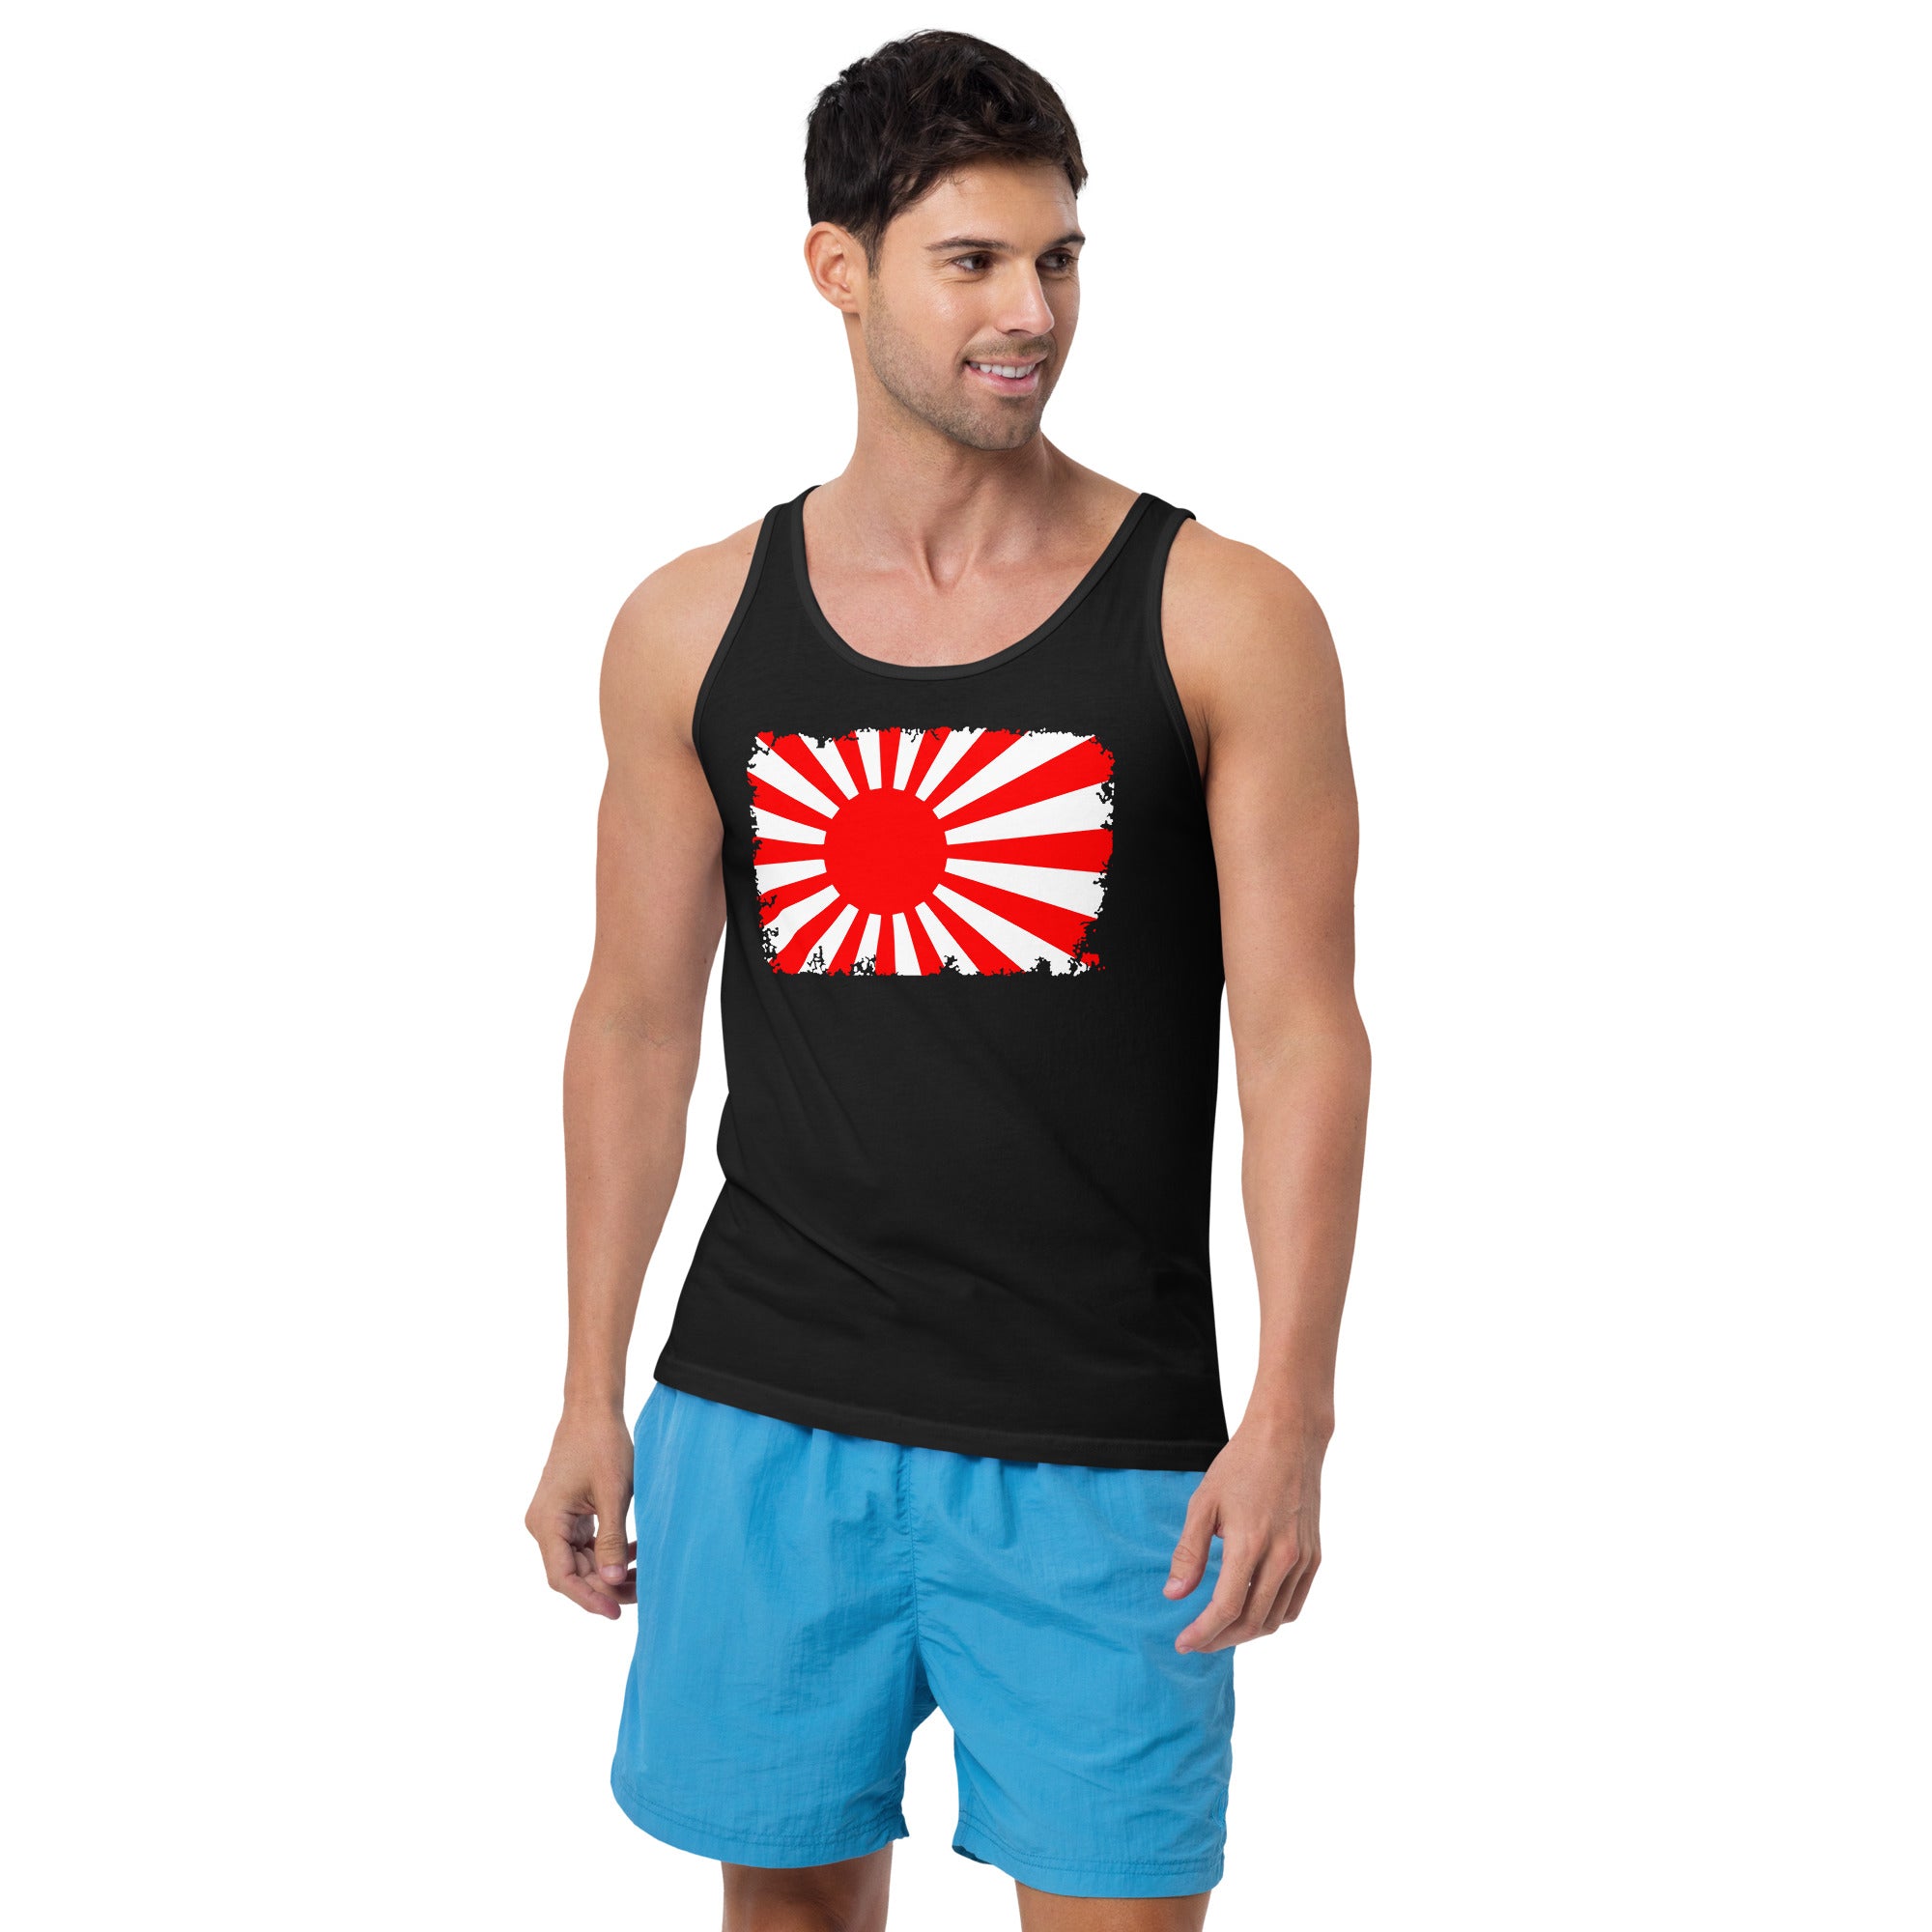 The National Flag of Japan Land of the Rising Sun Men's Tank Top Shirt